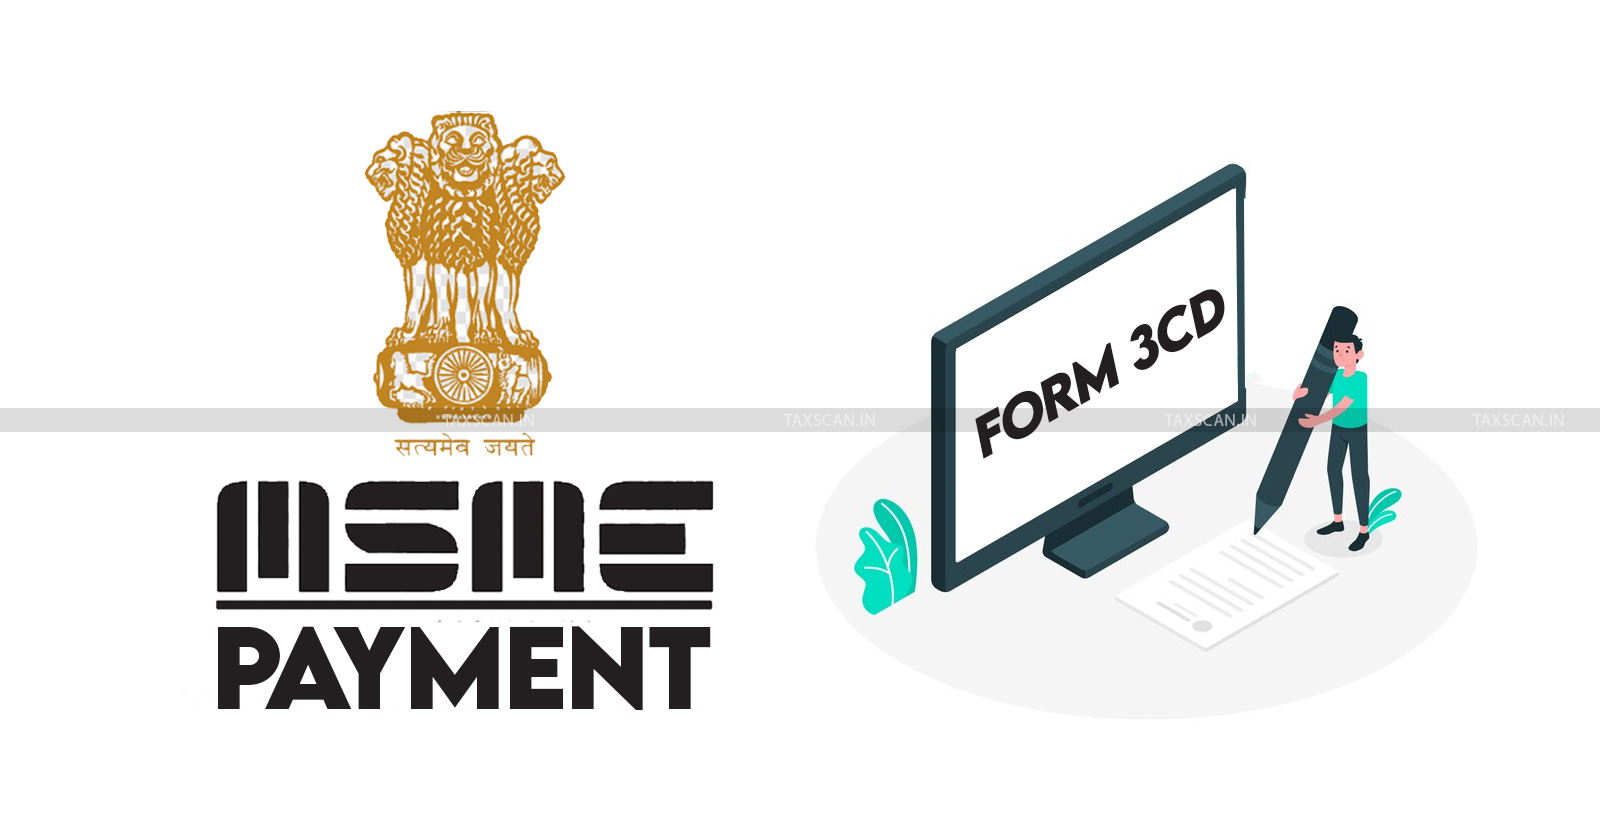 CBDT - CBDT notification - MSME - MSME payment - Tax audit form - Tax audit form updates - Form 3CD - taxscan